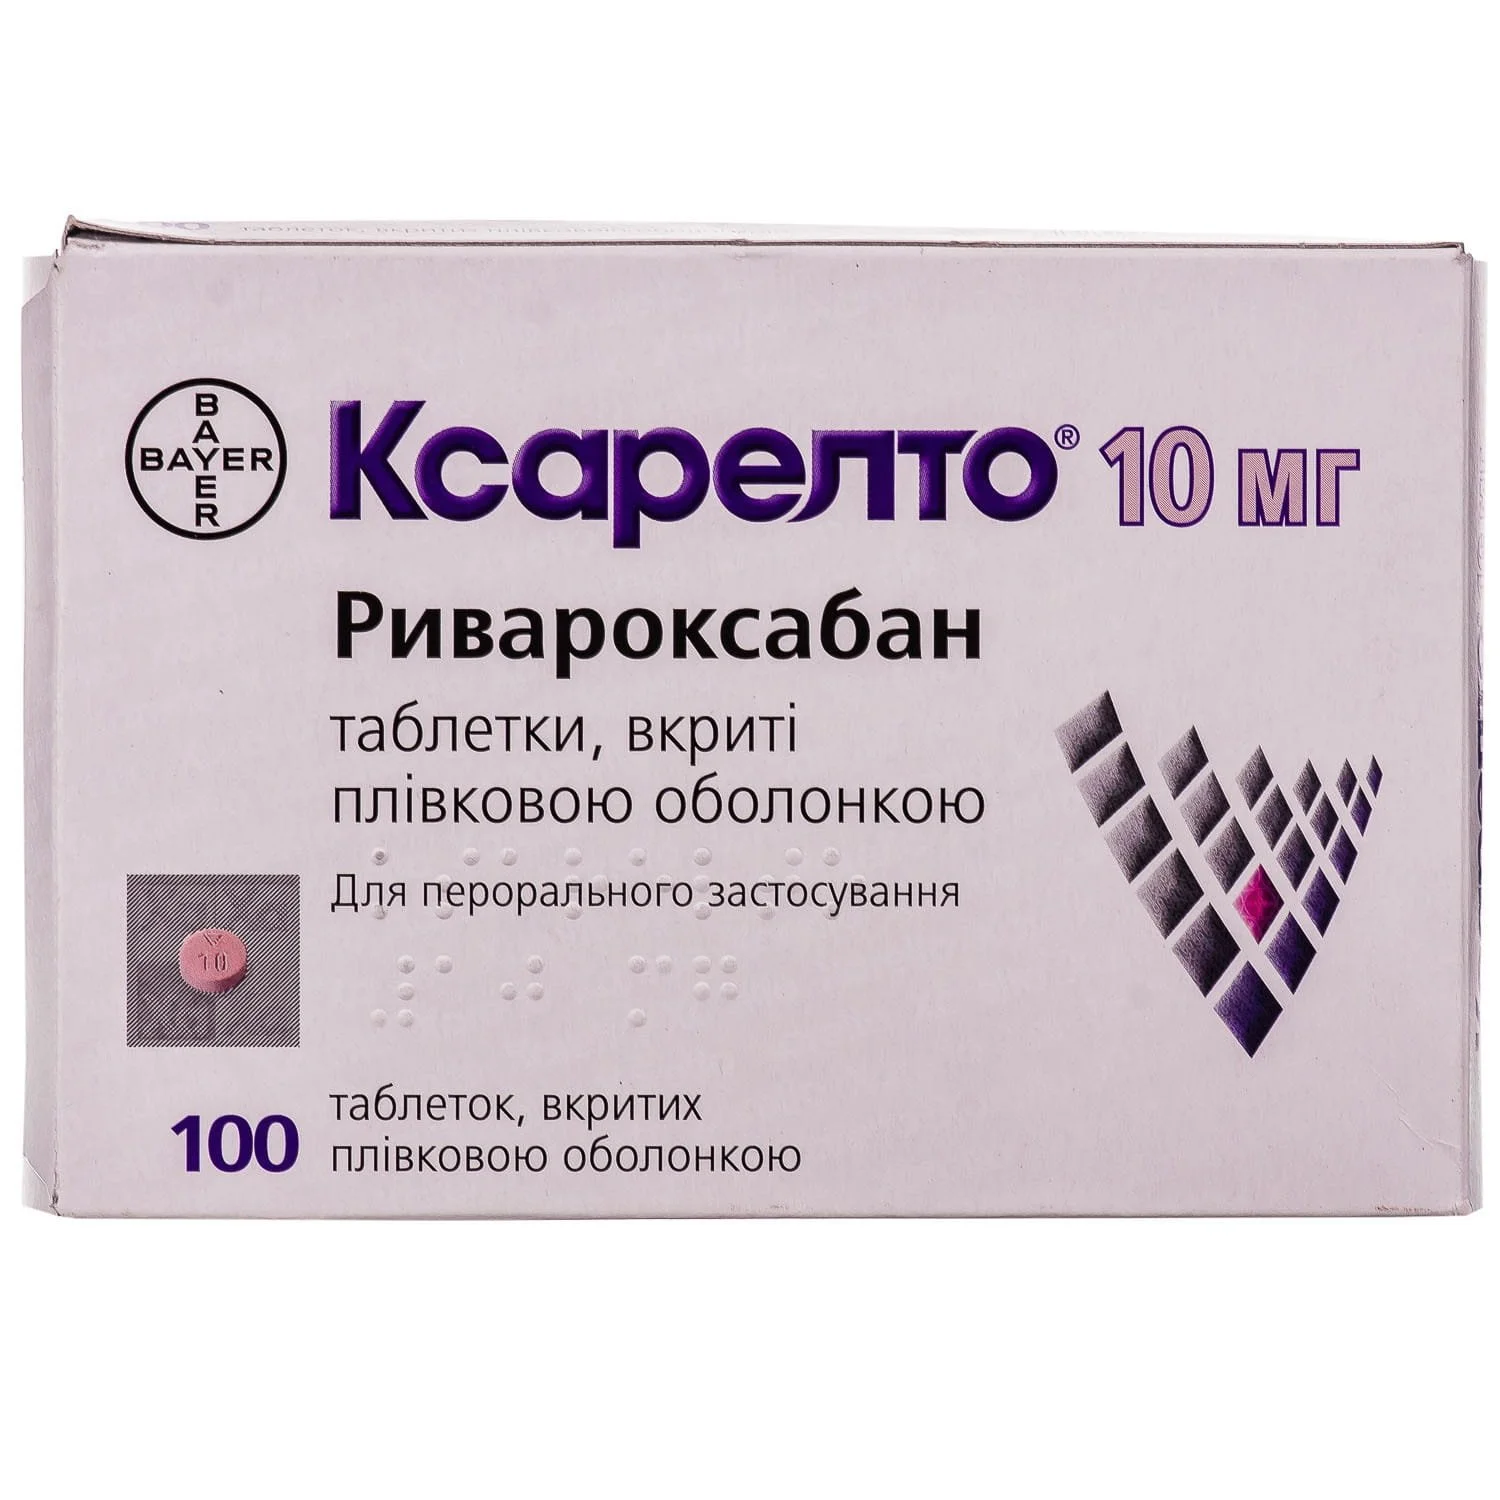 Ксарелто таблетки 20 мг. Ривароксабан 10 мг. Ксарелто 15 мг. Ксарелто 10 мг. Ксарелто при тромбозе вен